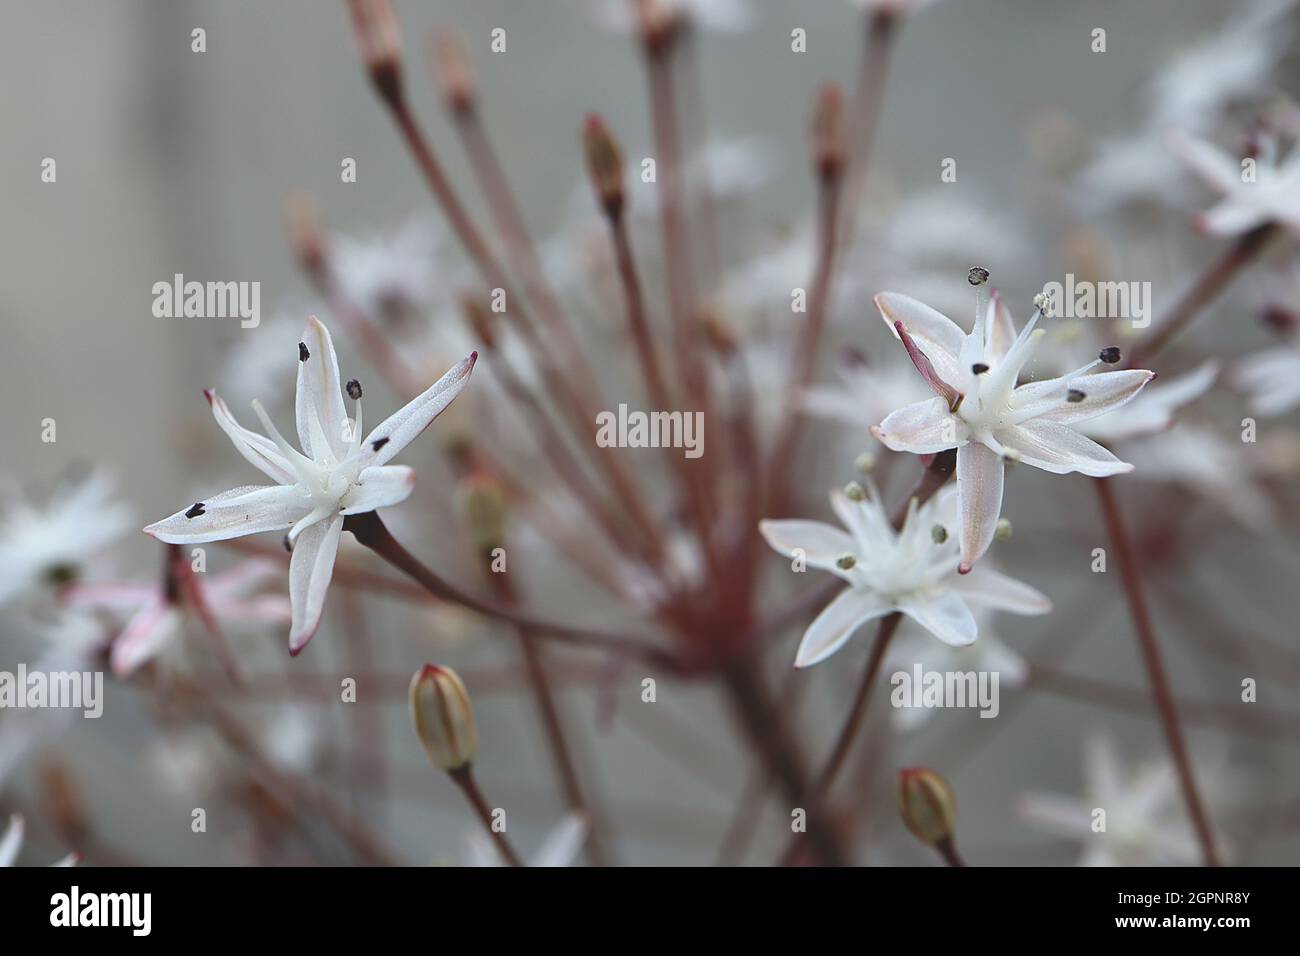 TÌNH YÊU CÂY CỎ ĐV.3 - Page 74 Strumaria-chaplinii-gemmaria-chaplinii-white-star-shaped-flowers-similar-to-squill-scilla-september-england-uk-2GPNR8Y